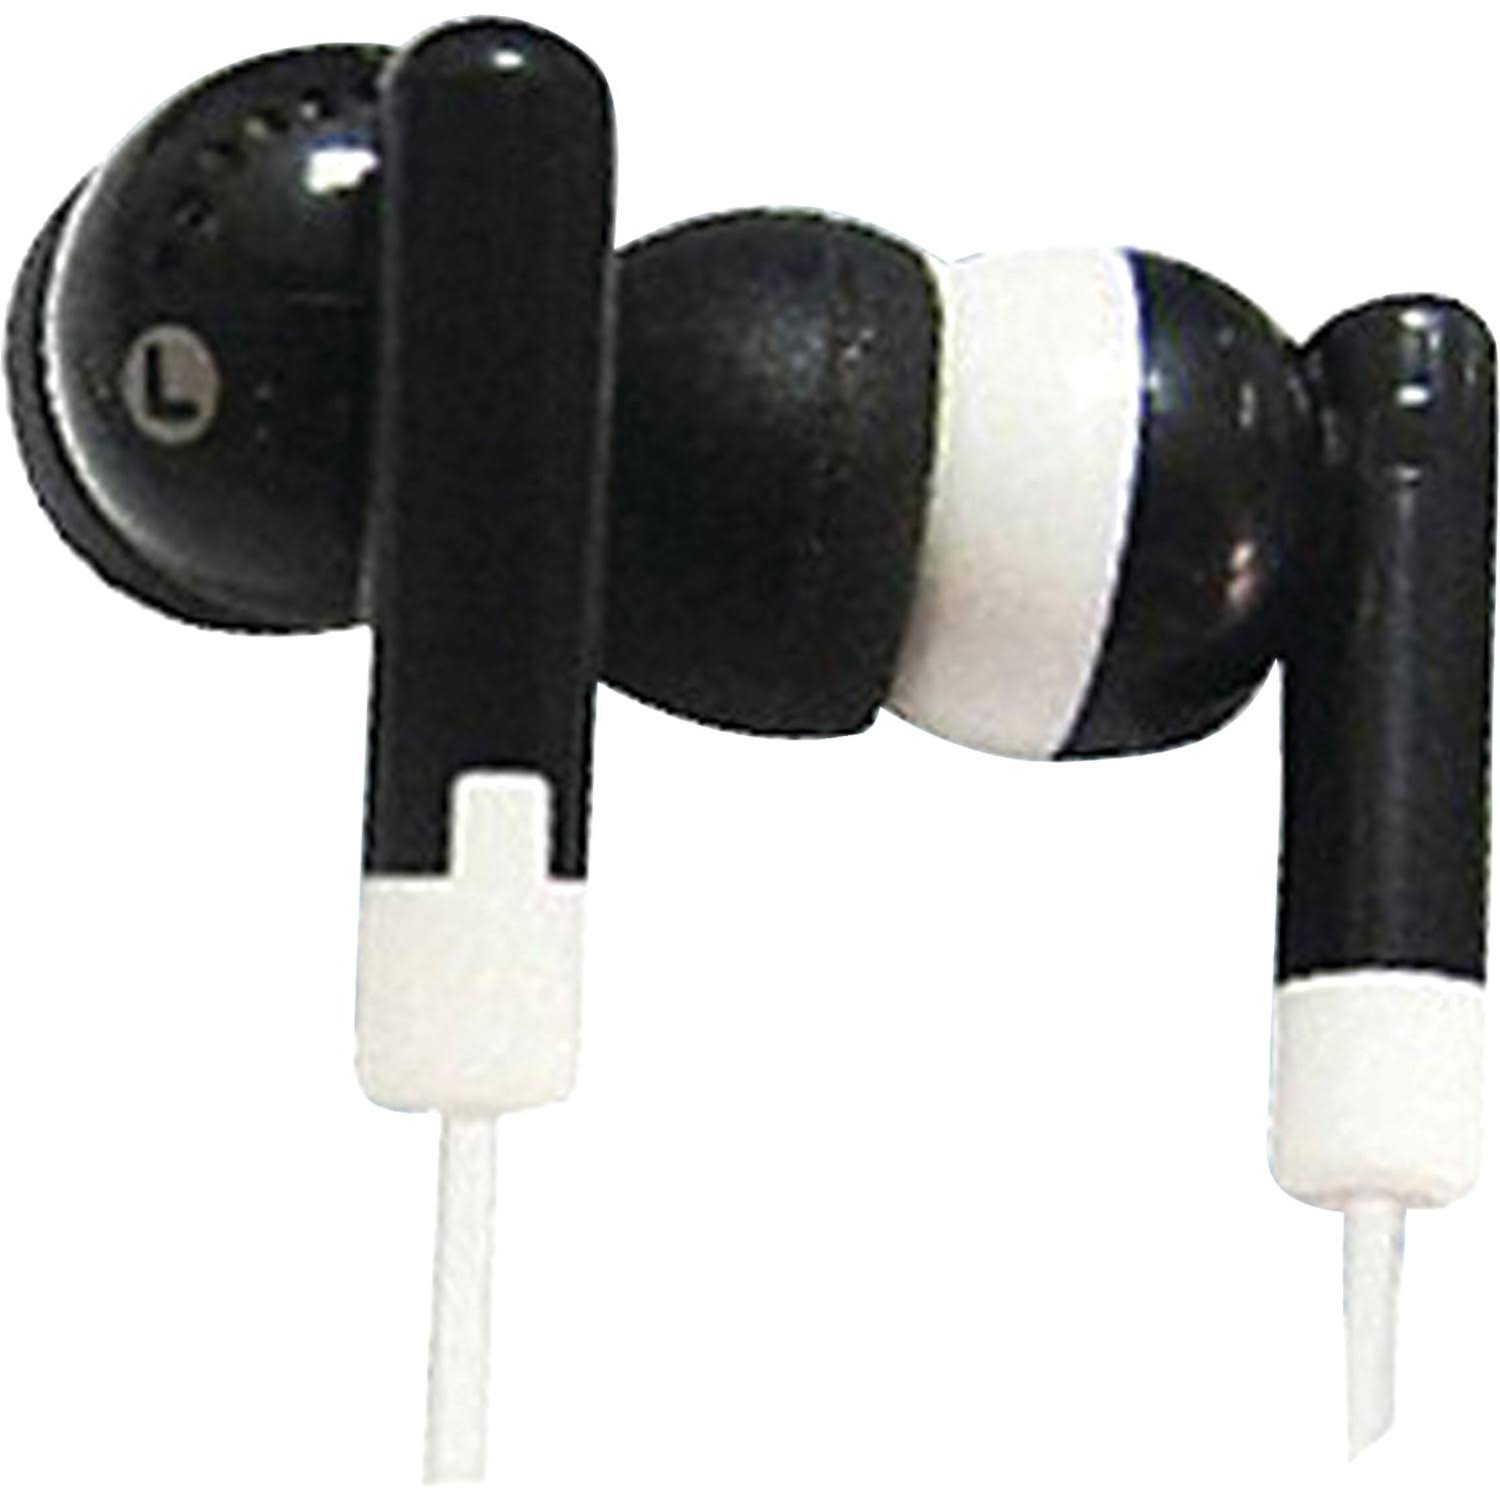 Supersonic IQ-101 Digital Stereo Earphones (Black)